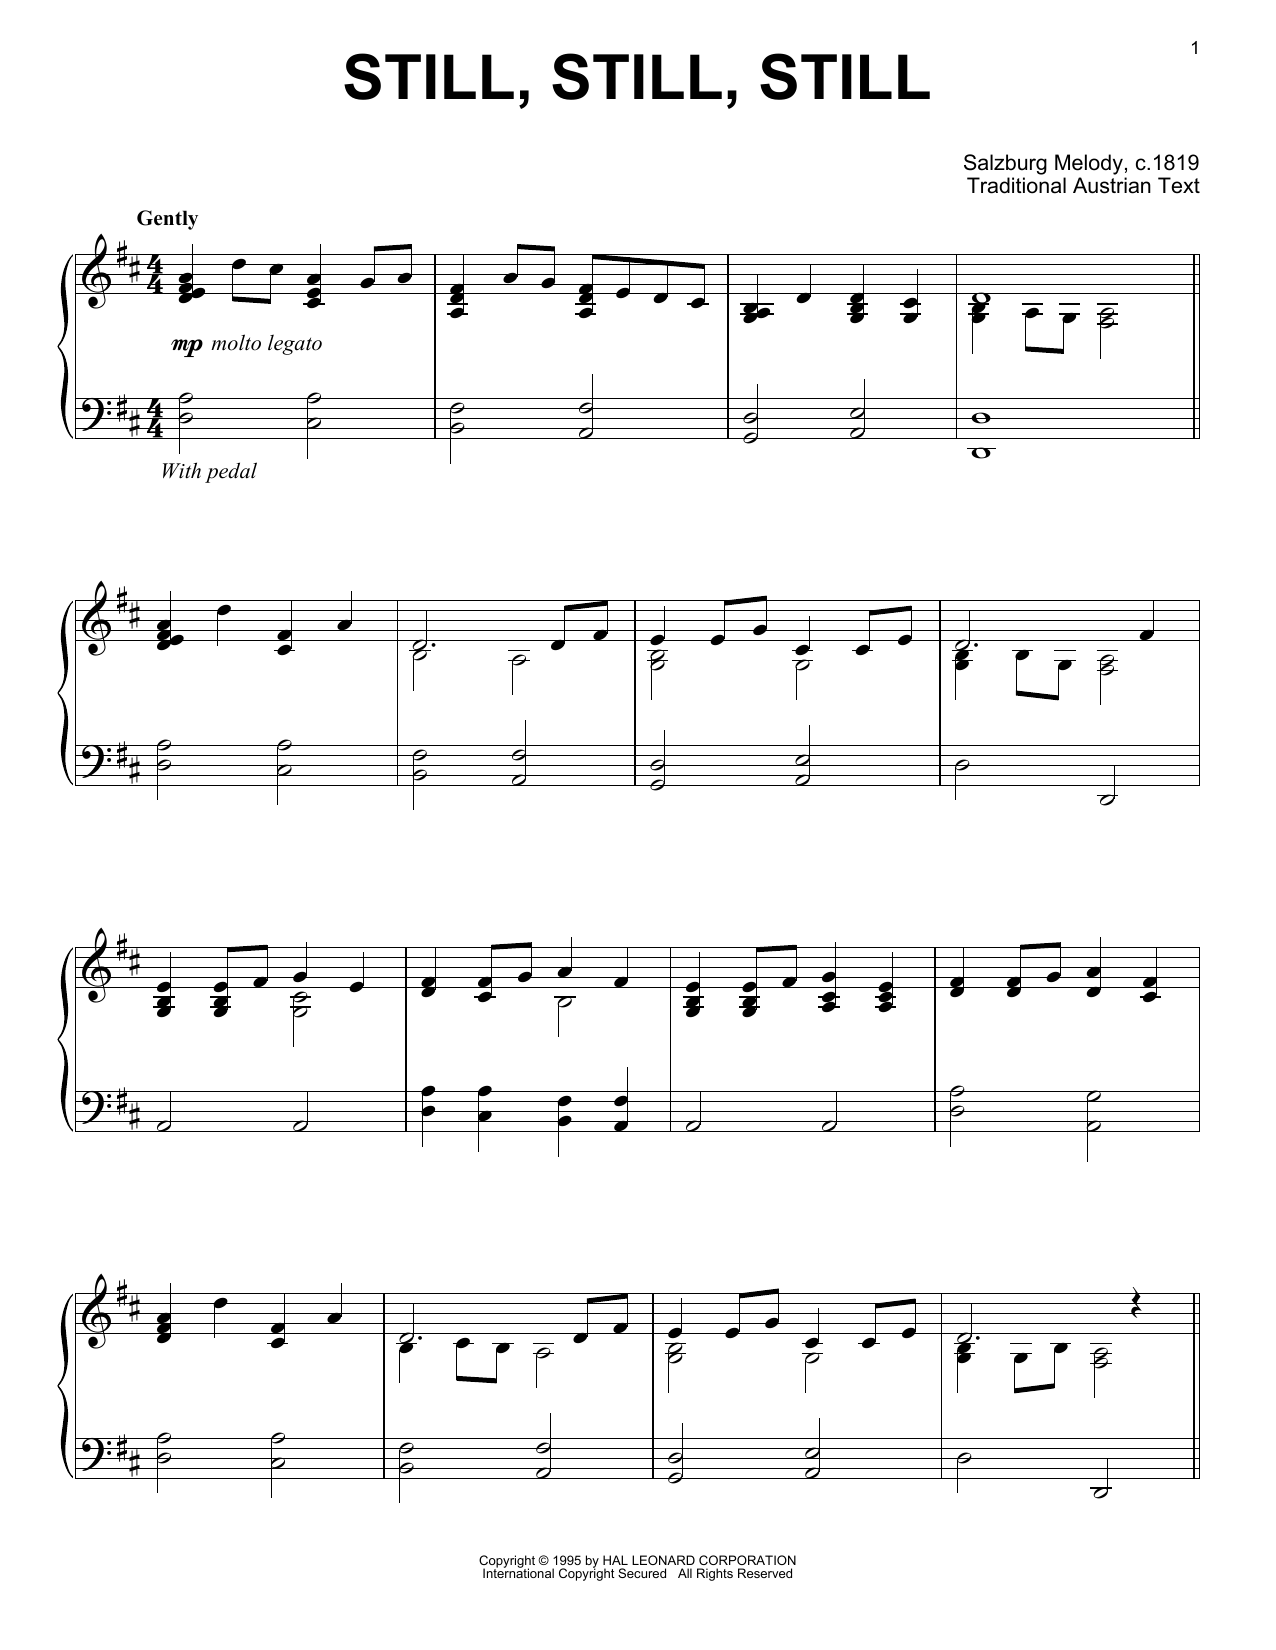 Traditional Austrian Text Still, Still, Still sheet music notes and chords arranged for Tenor Sax Solo